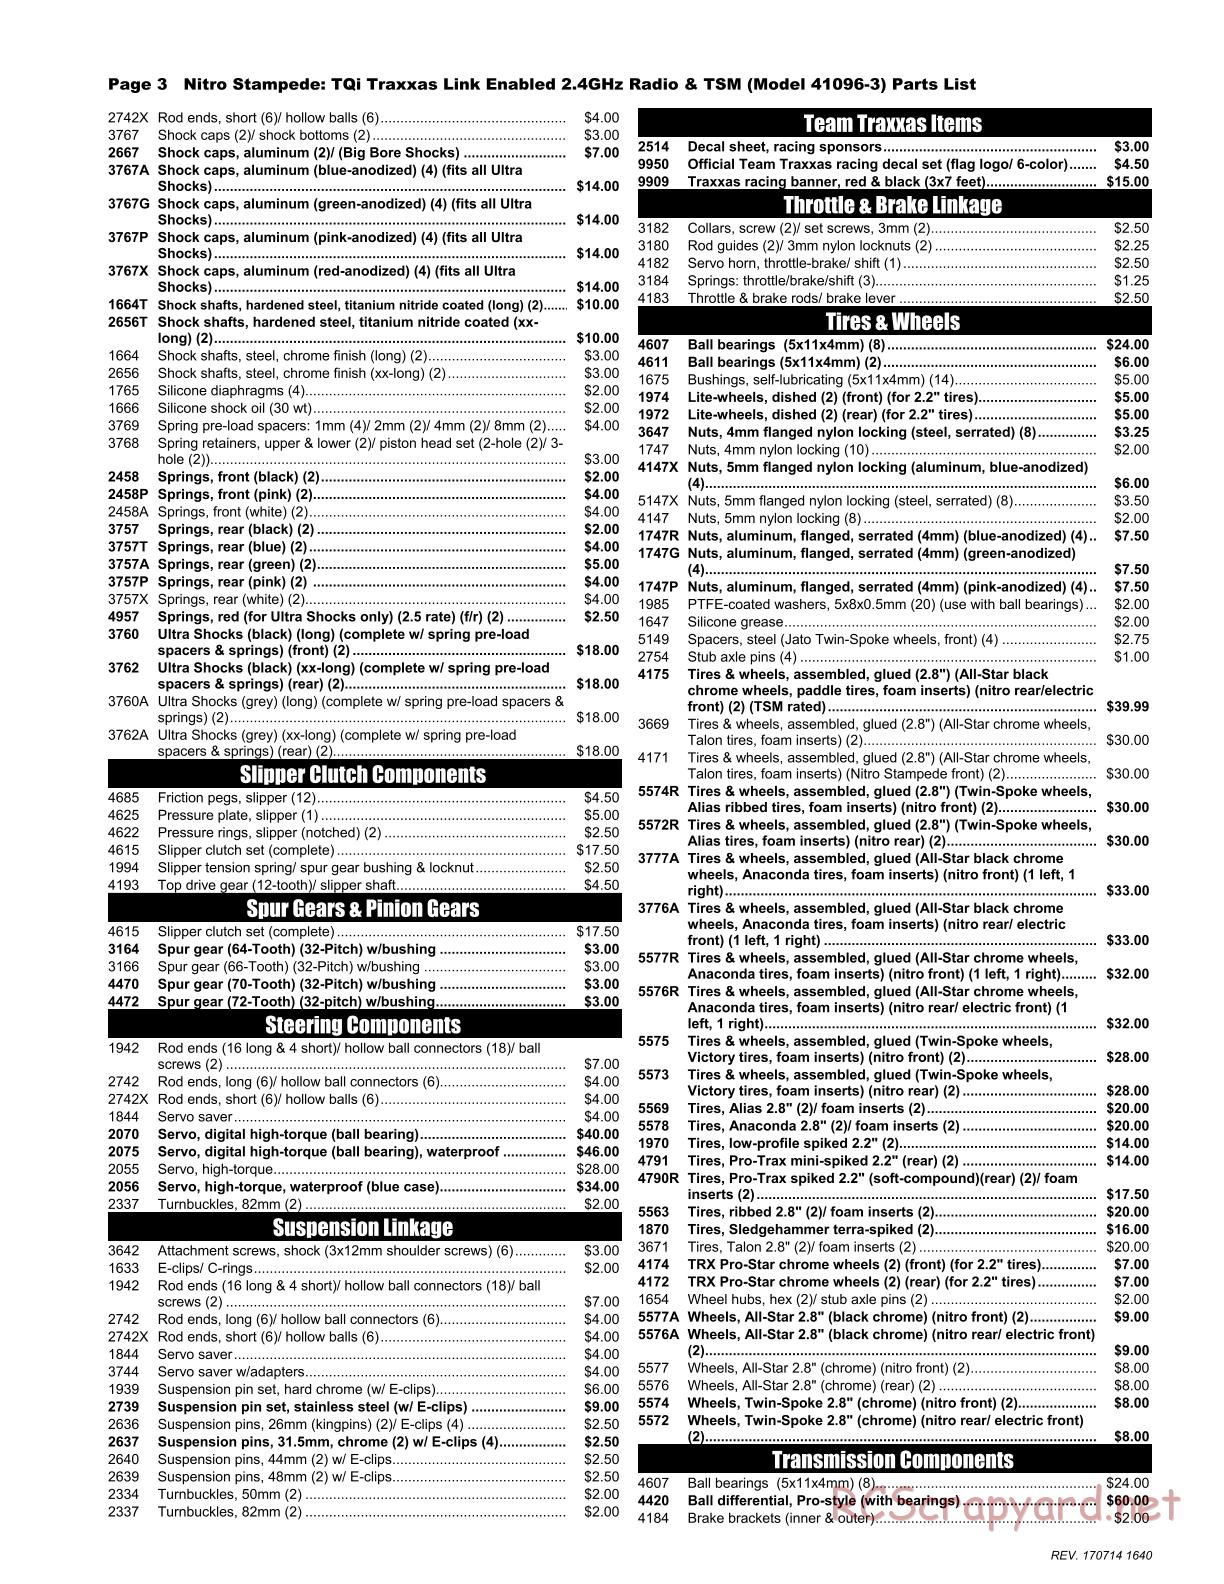 Traxxas - Nitro Stampede TSM - Parts List - Page 3